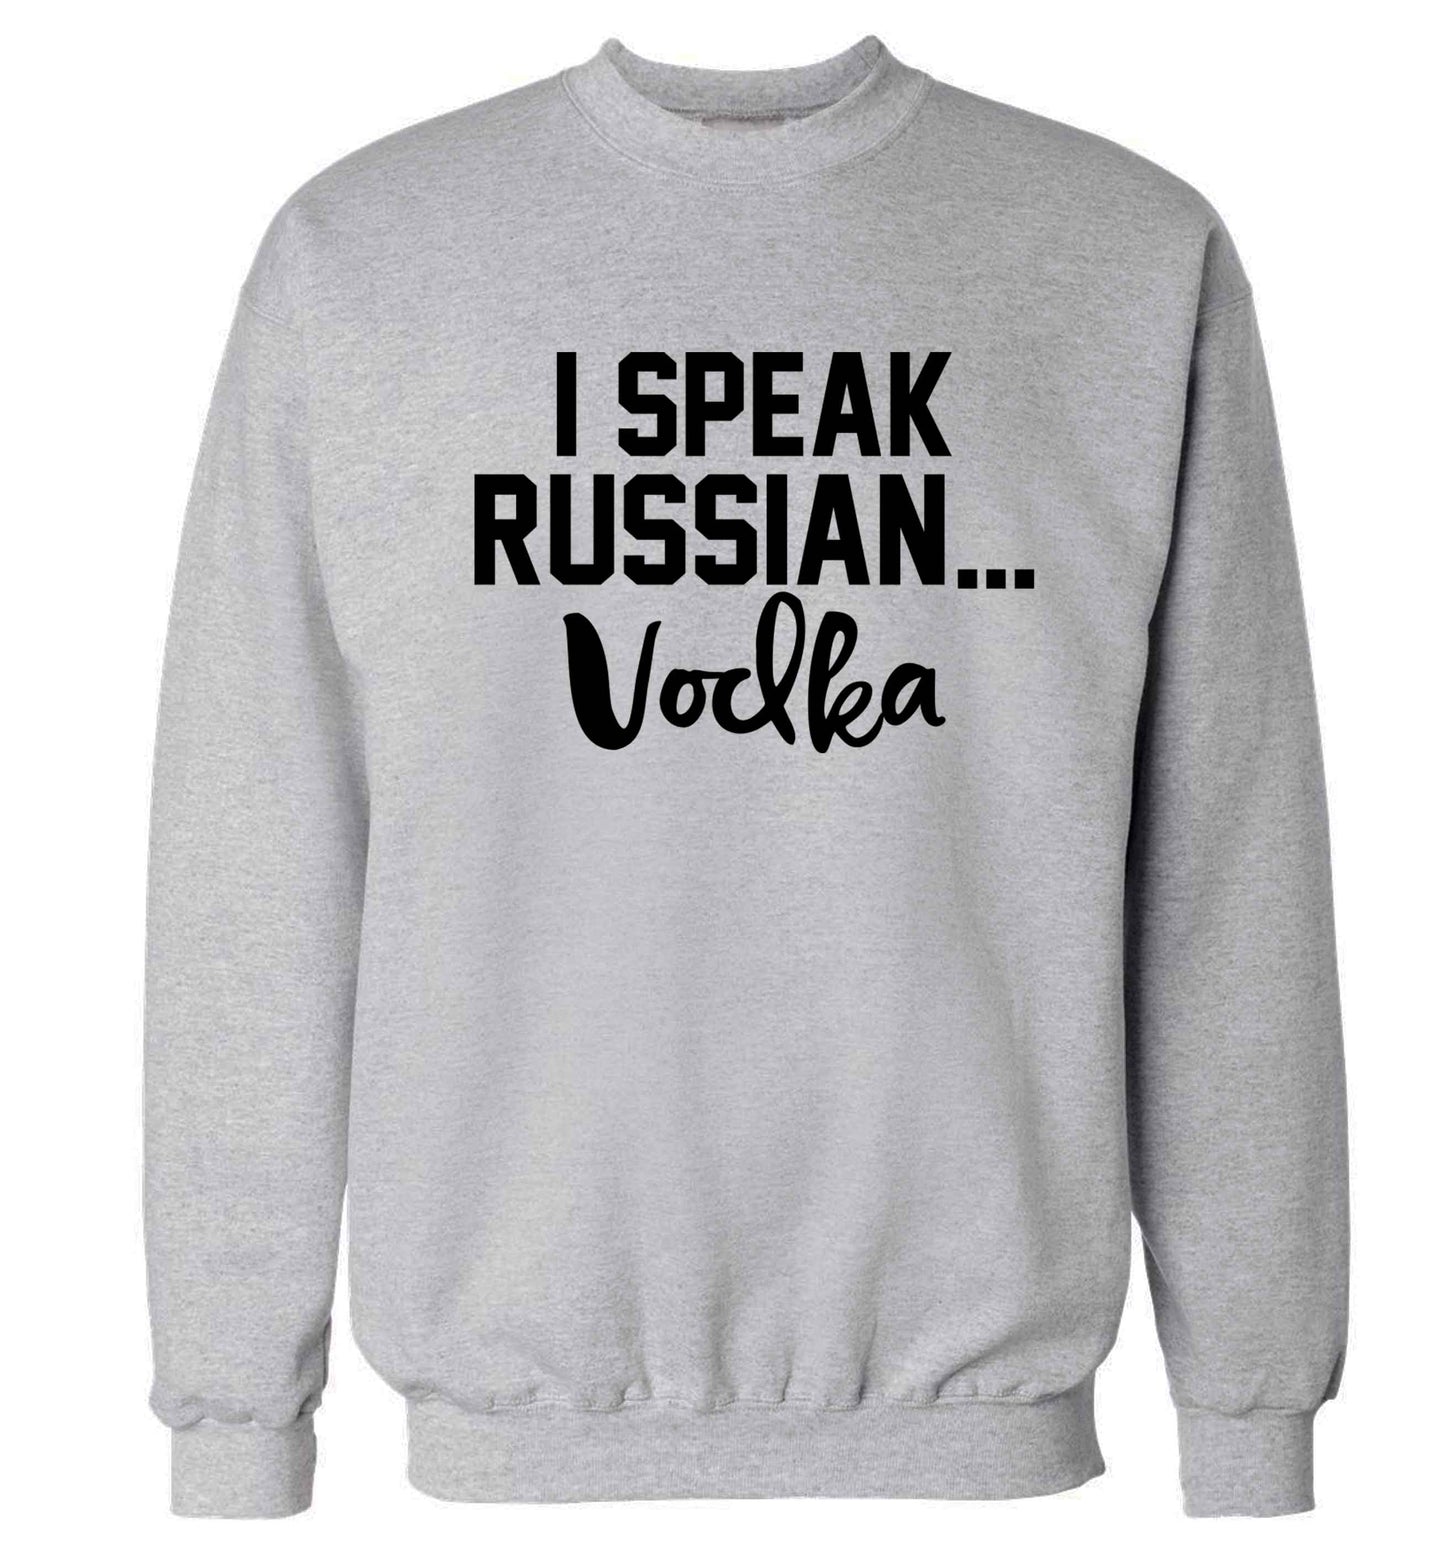 I speak russian...vodka Adult's unisex grey Sweater 2XL